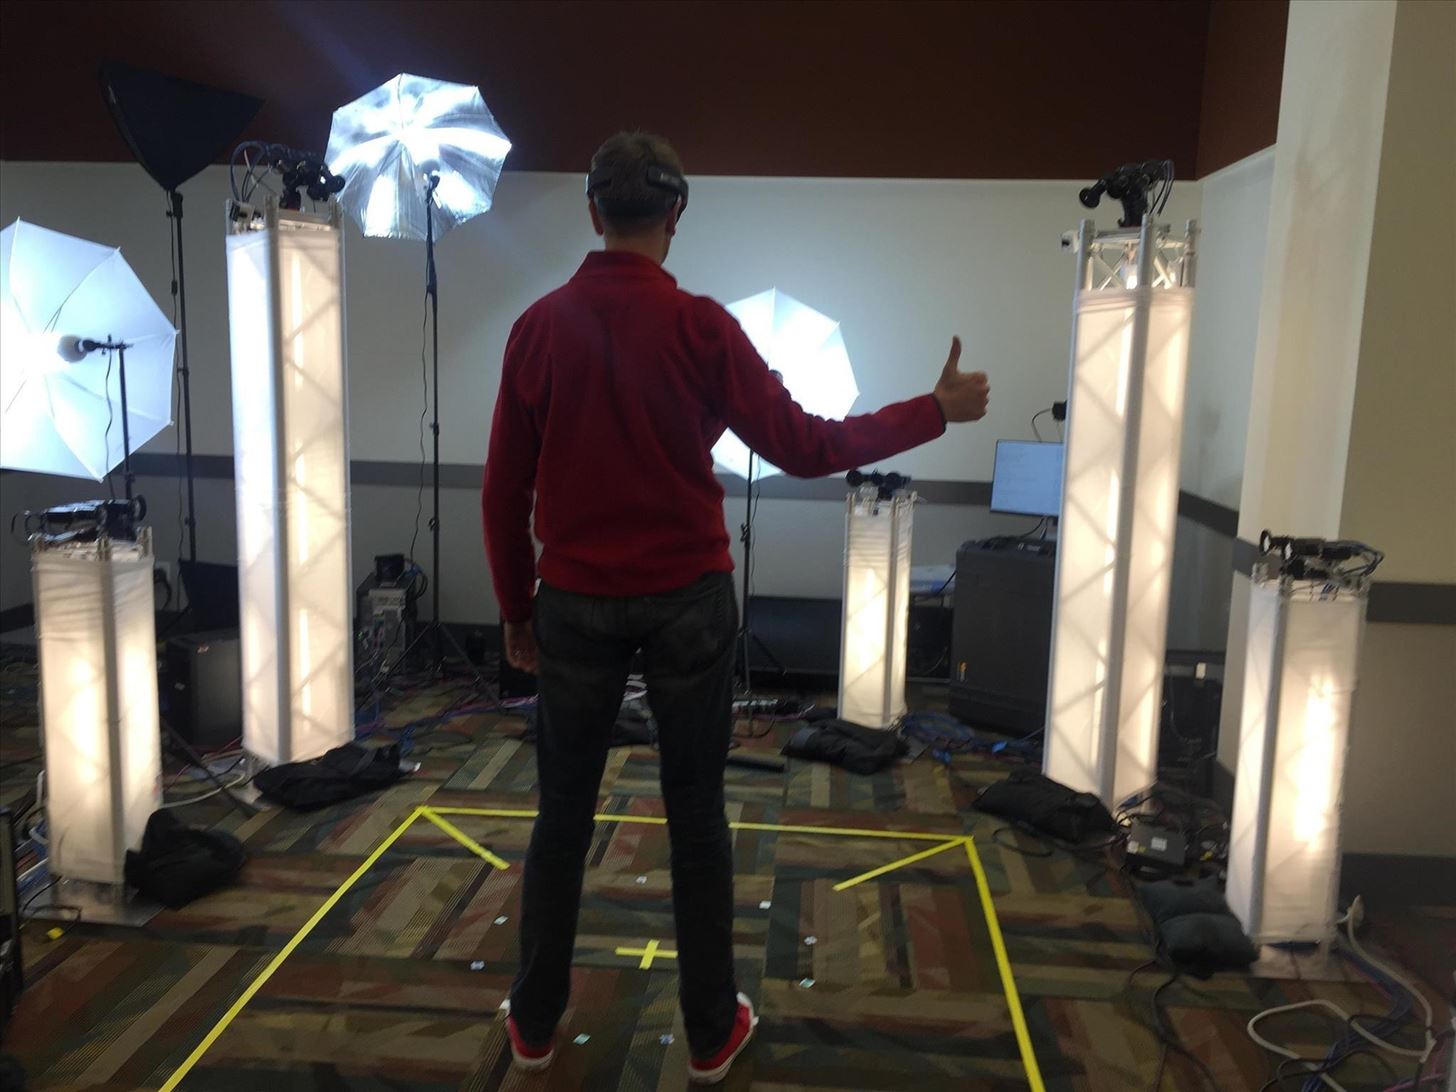 Microsoft HoloLens Makes Virtual Teleportation a Reality